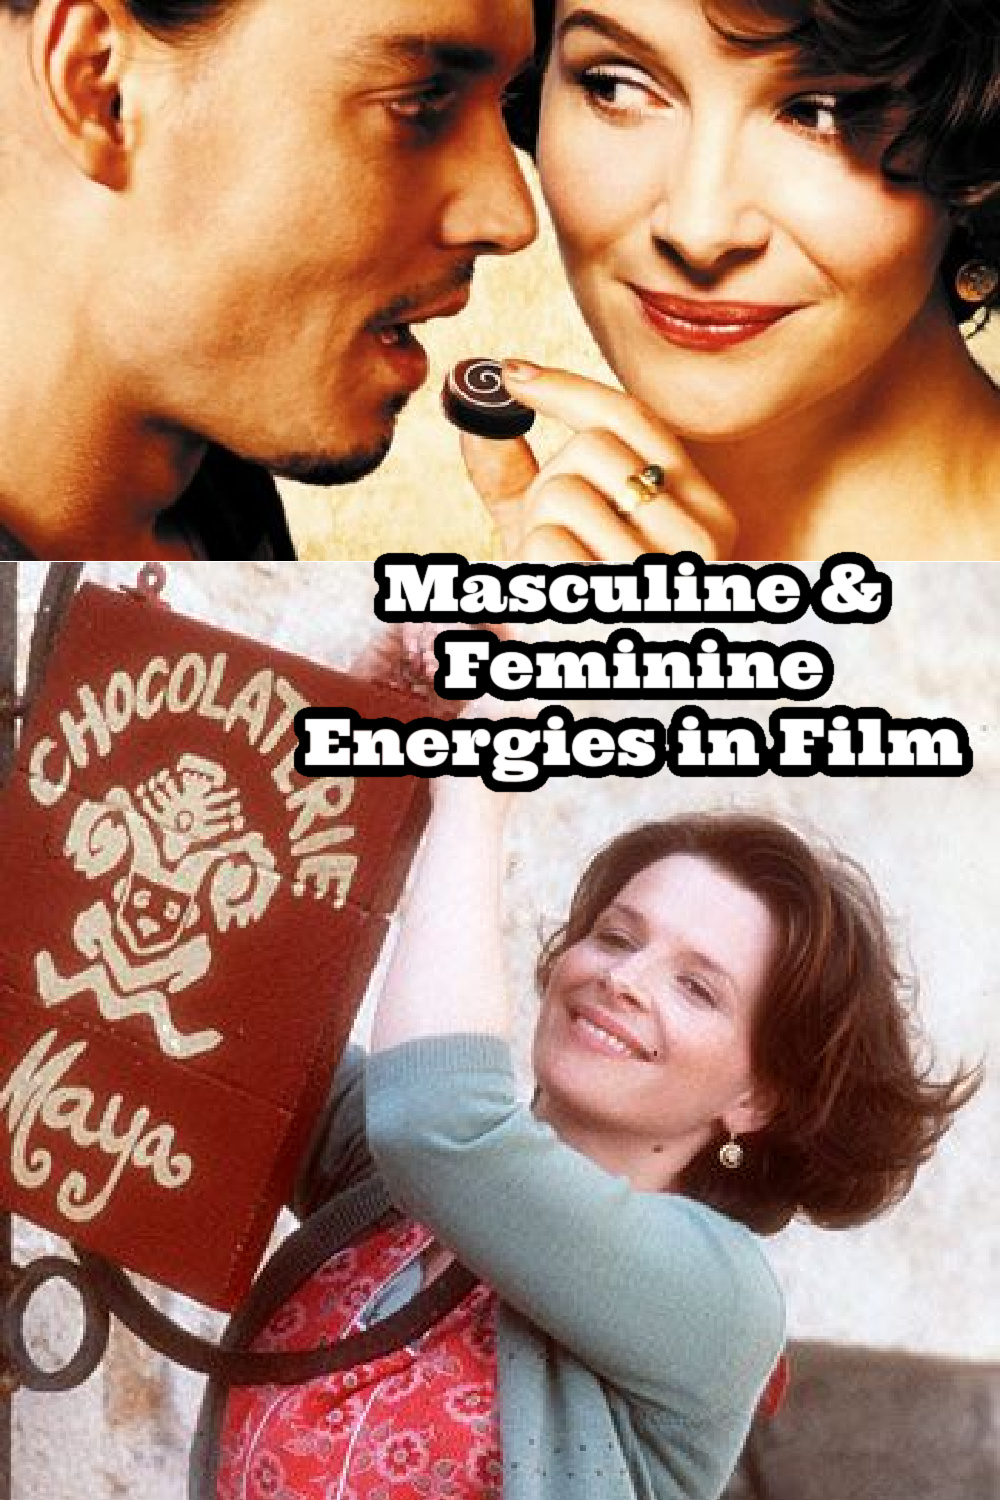 Feminine & Masculine Energy in Relationships | Chocolat Film Analysis